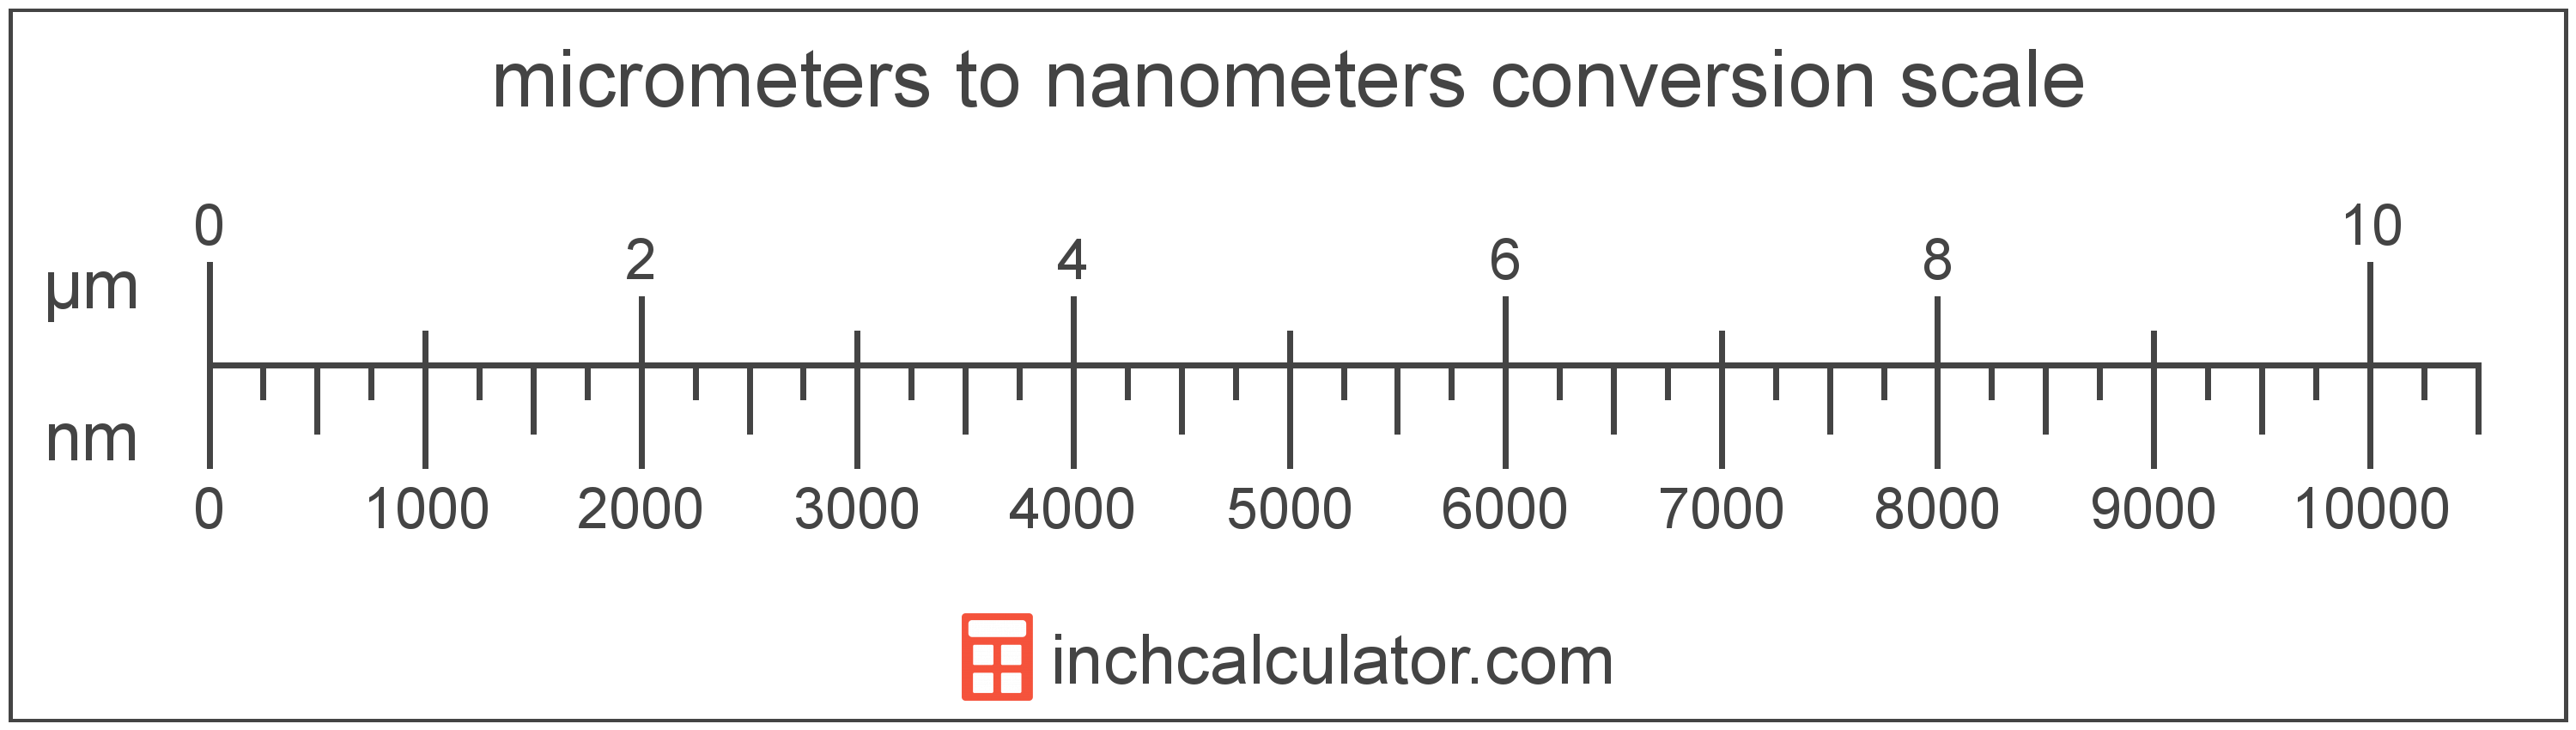 Convert Micrometers to Nanometers - (µm to nm)